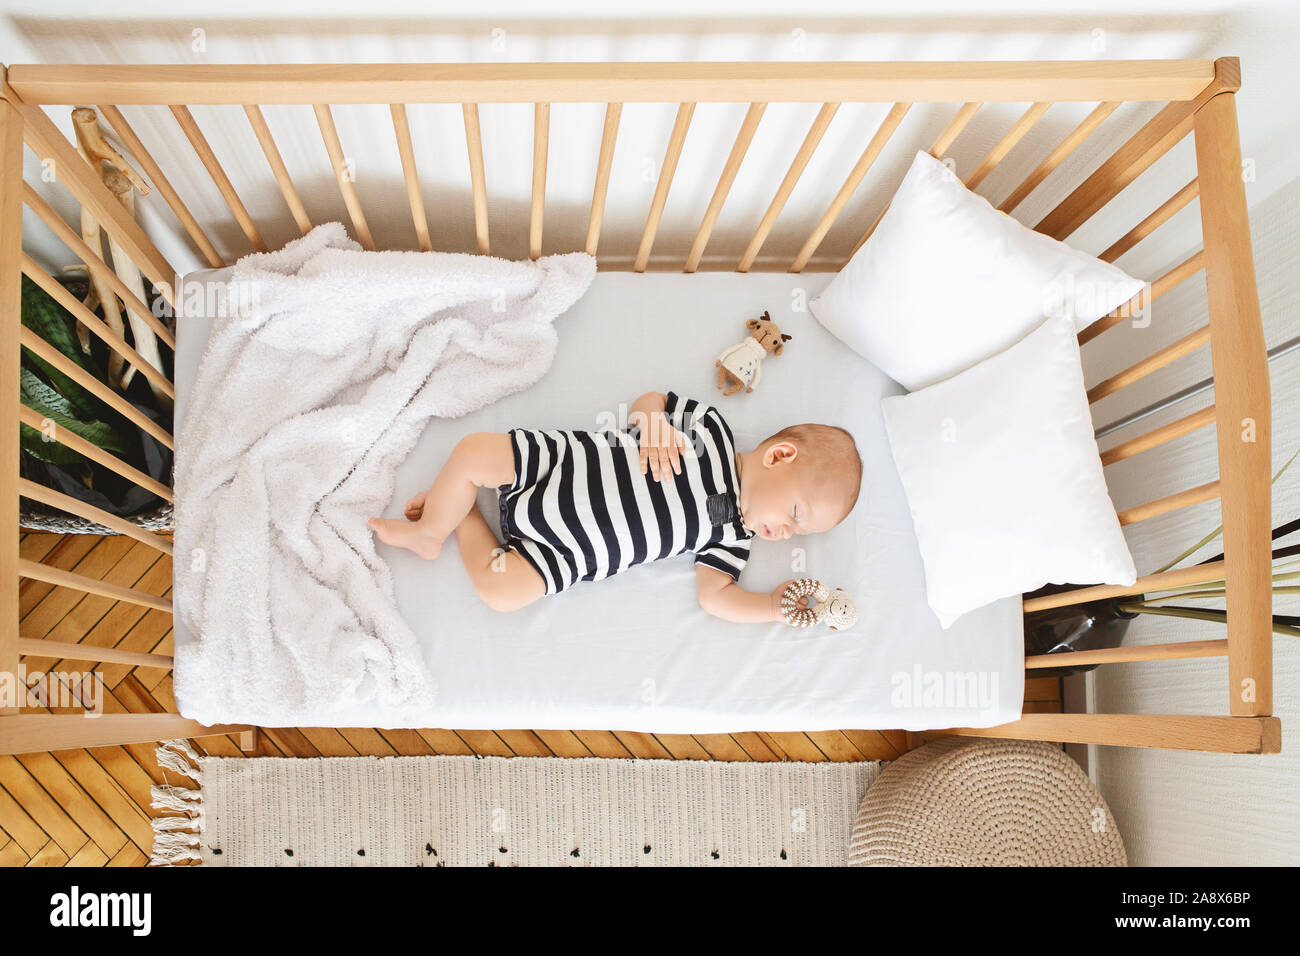 baby sleeping cot bed